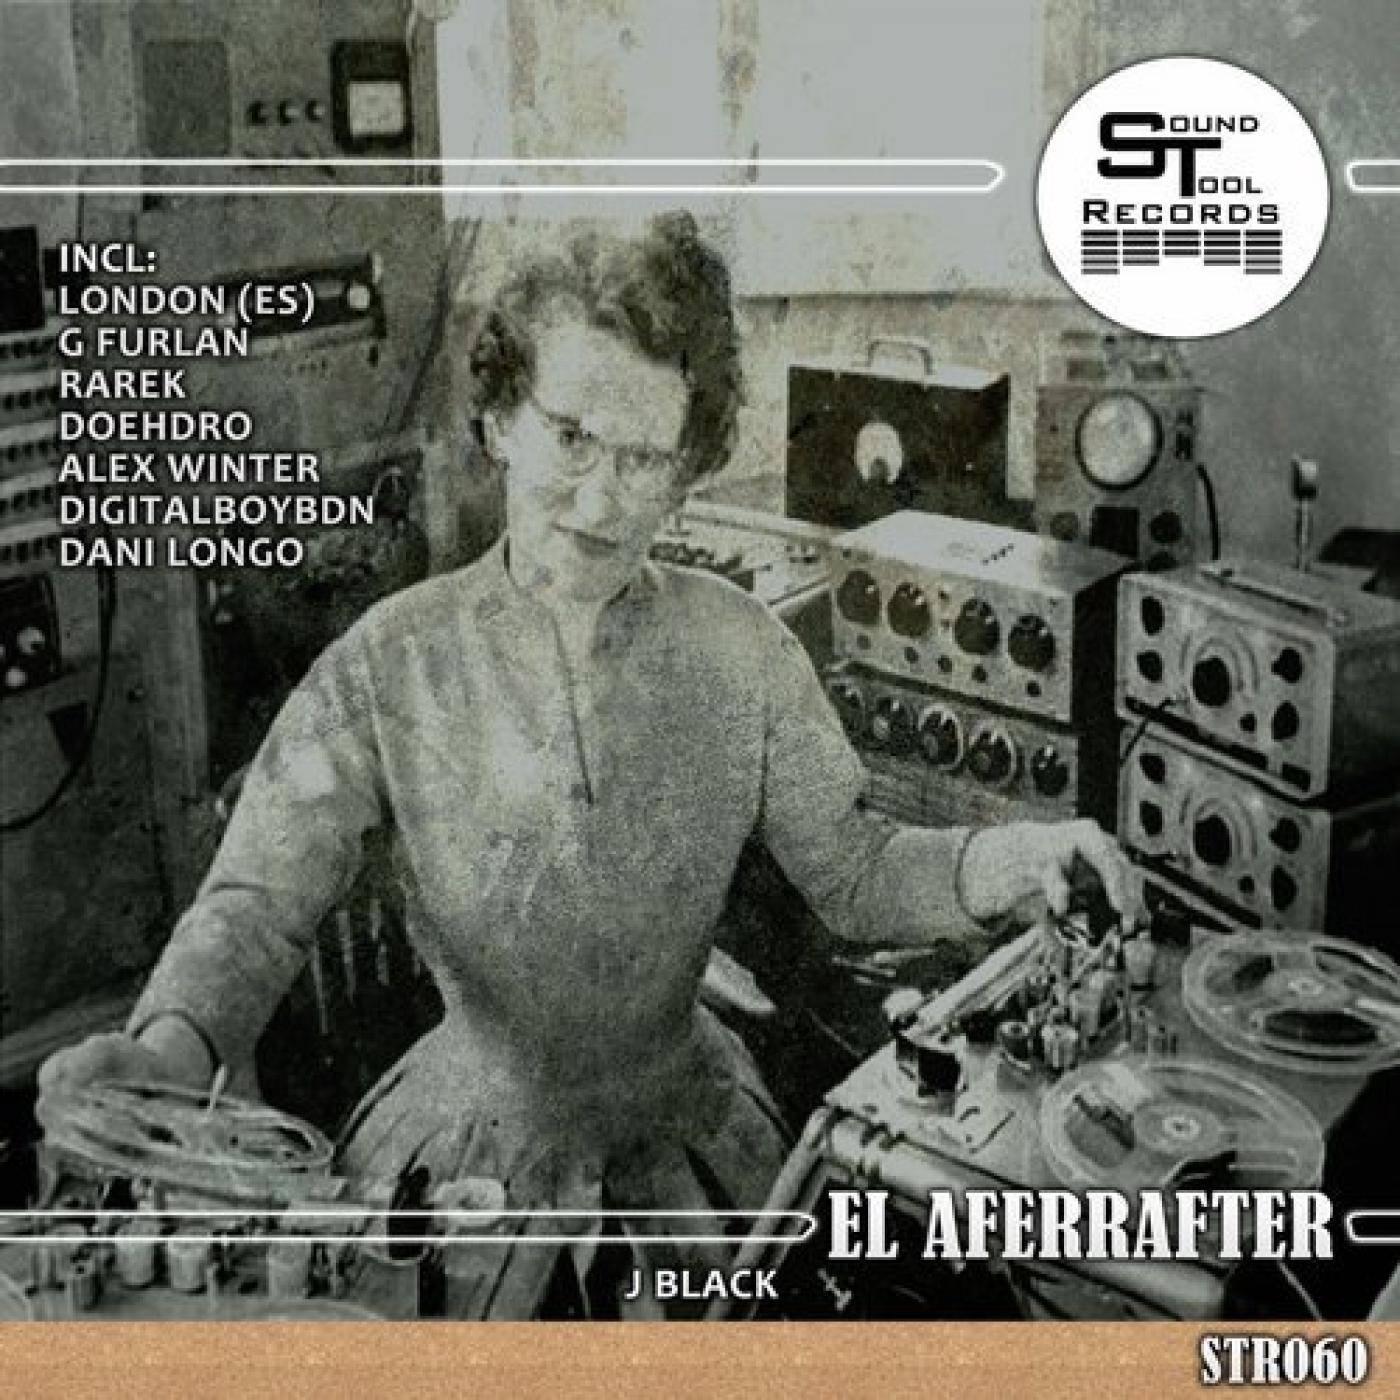 El Aferrafter (Alex Winter Remix)